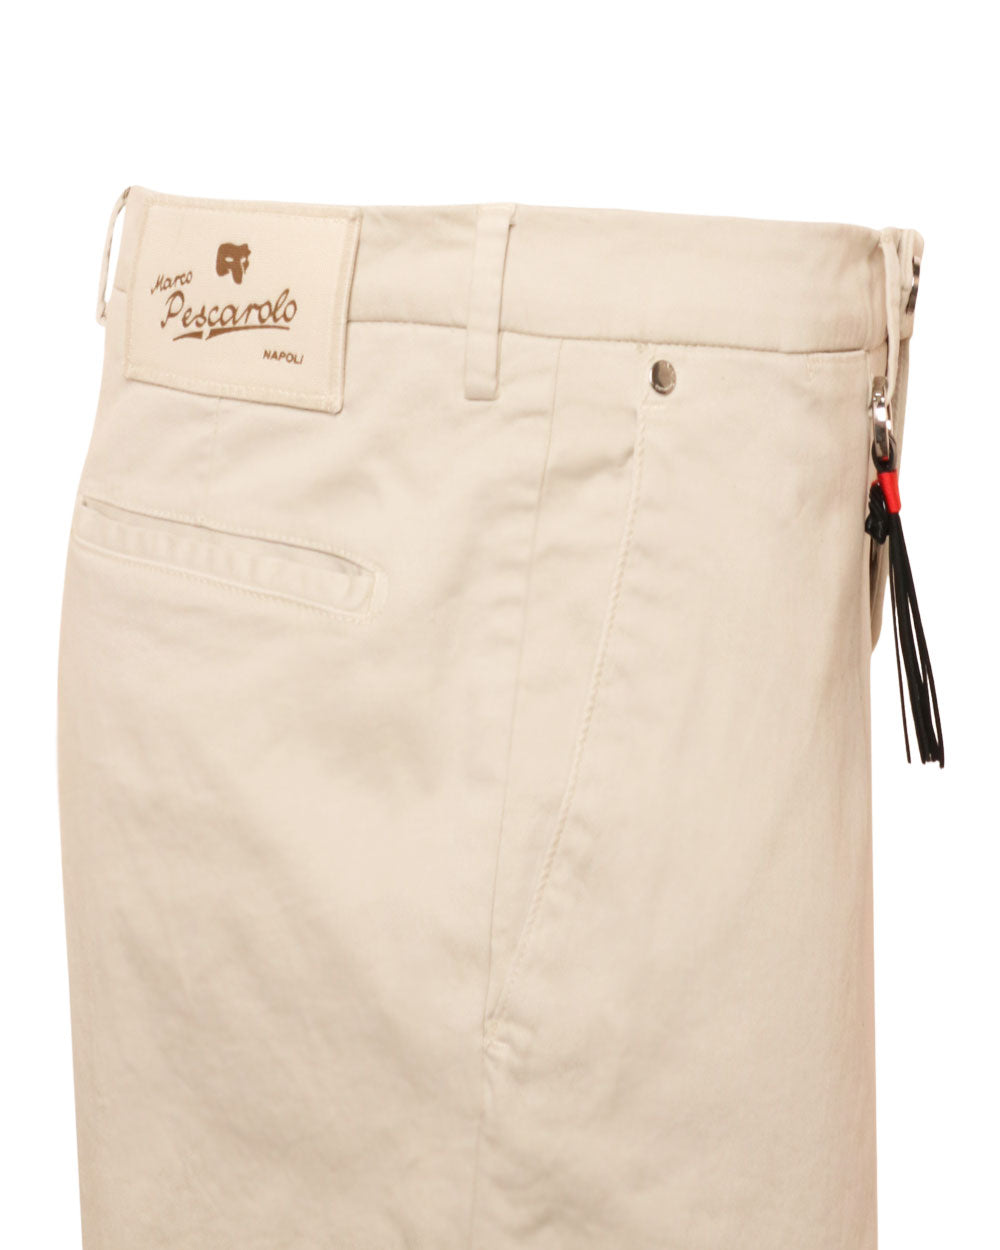 Semi Dress Flat Front 5 Pocket Pant in Cream